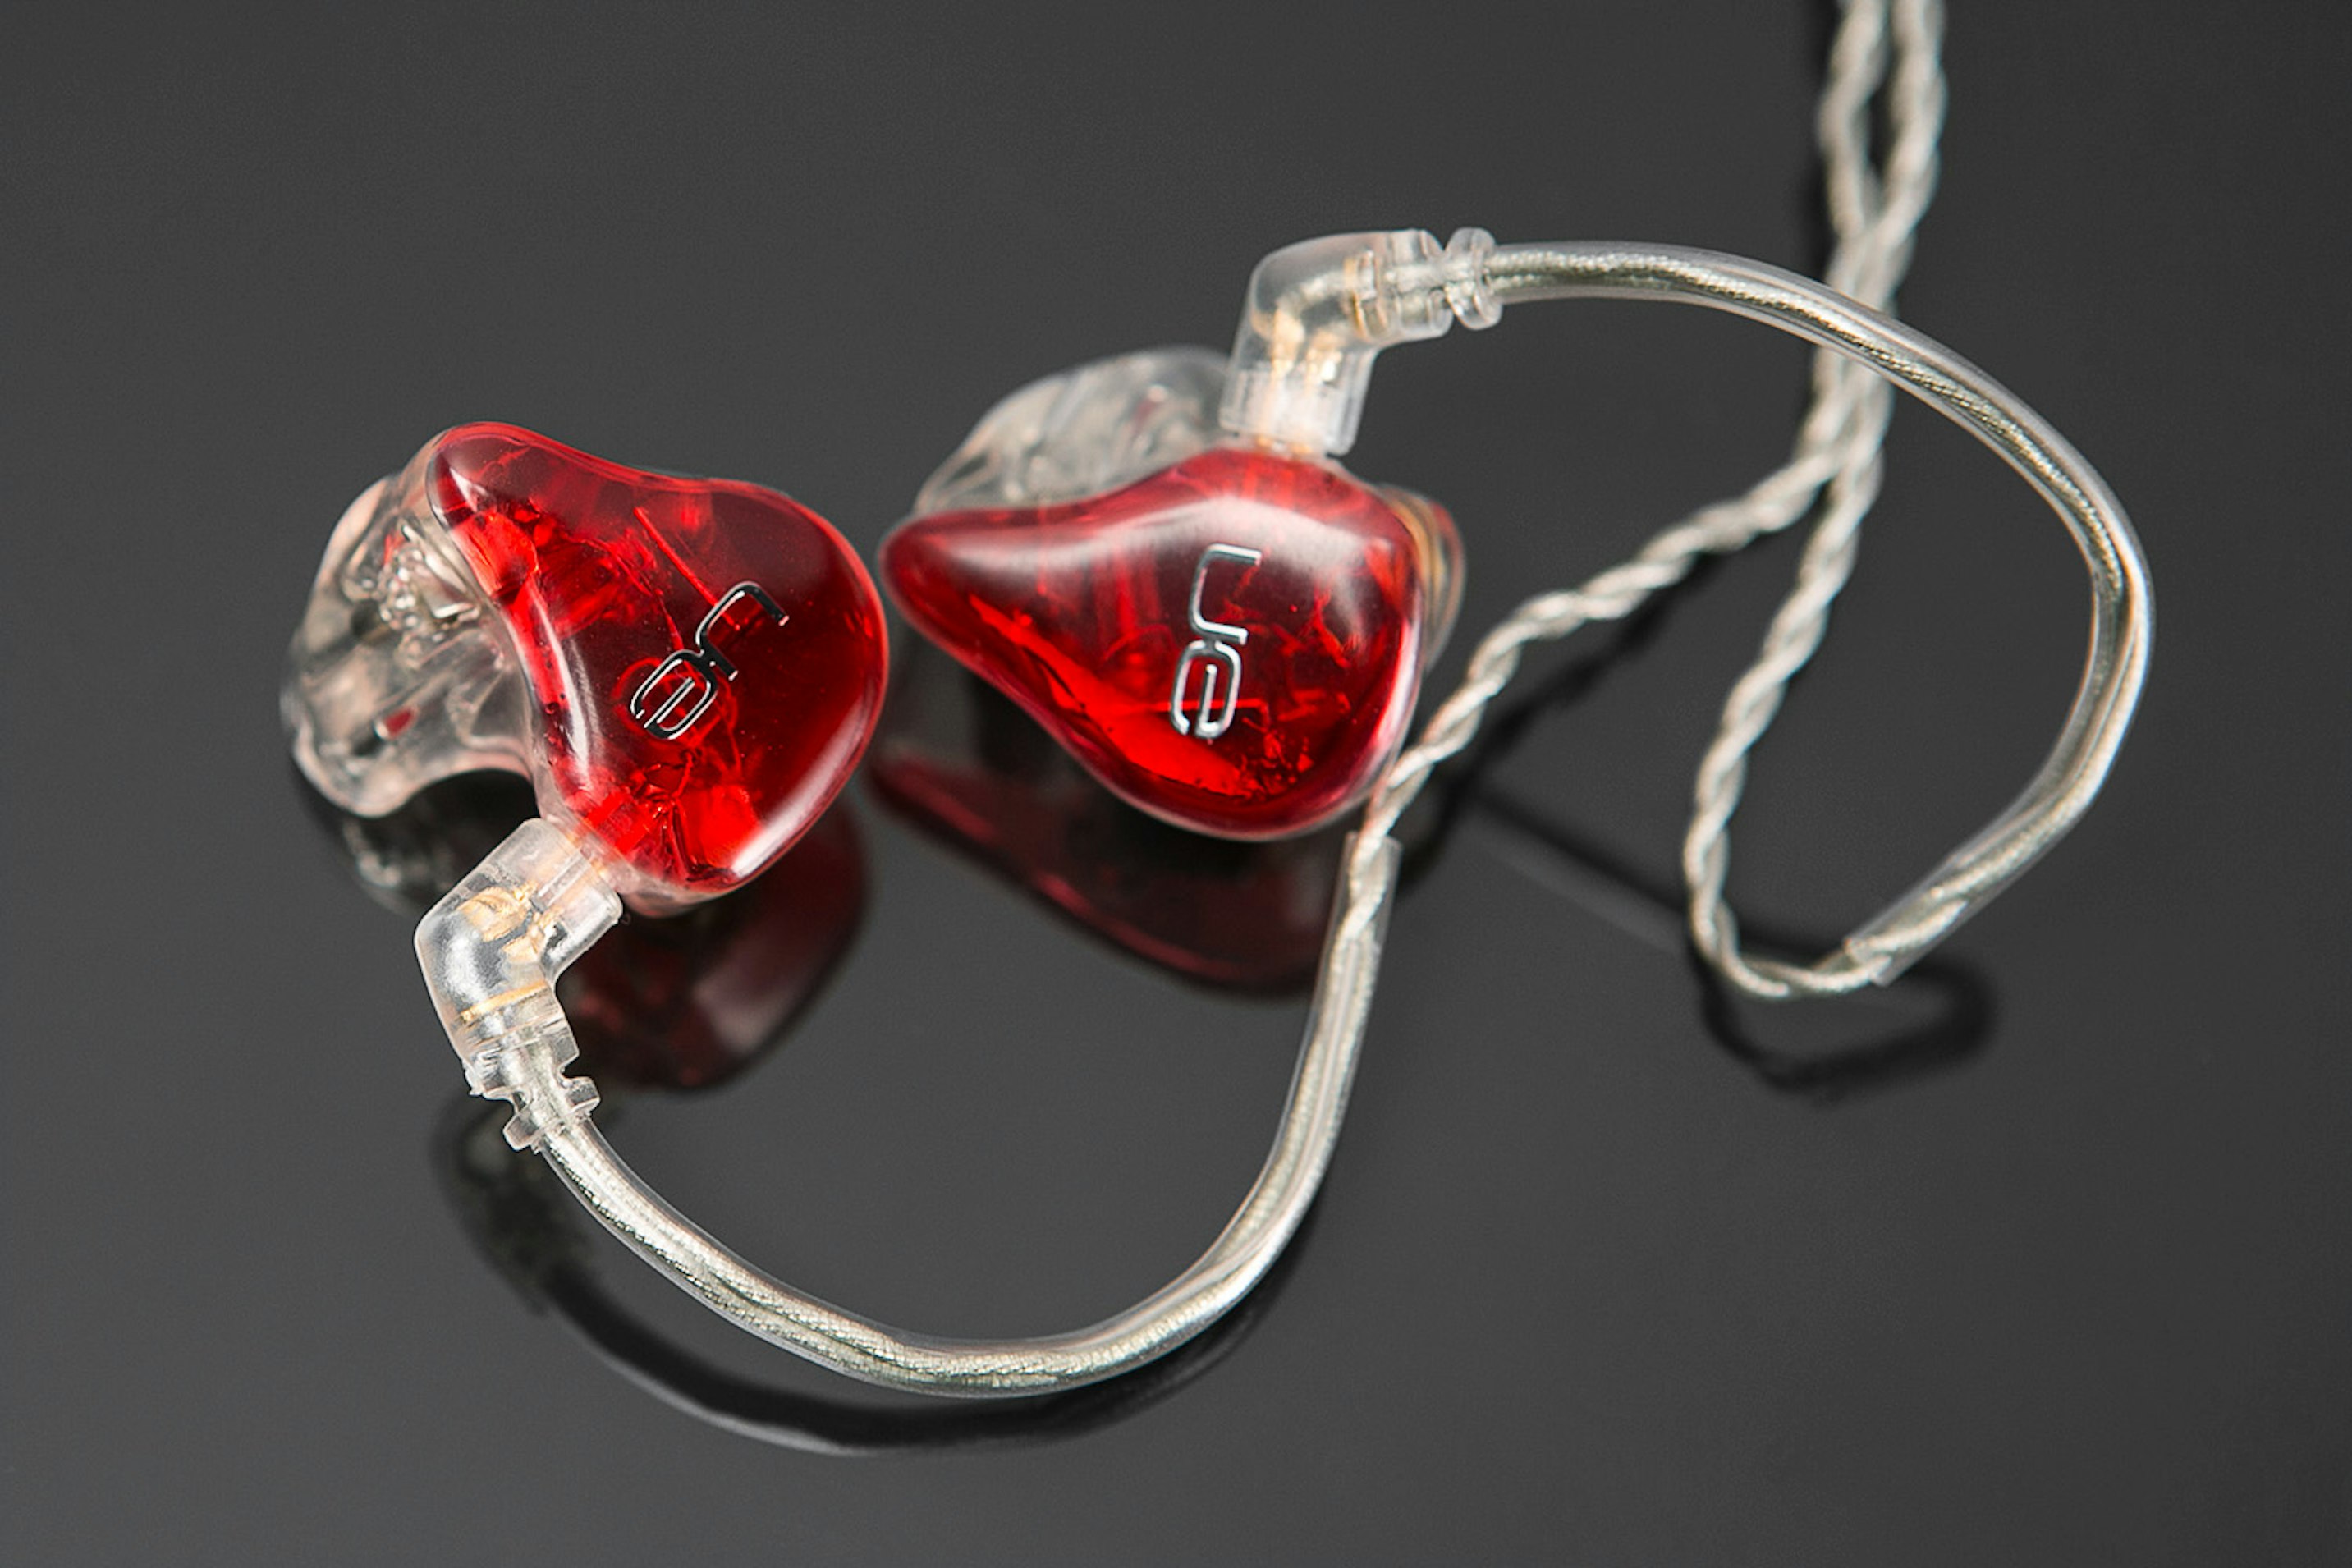 Ultimate Ears 18 Pro Custom In Ear Monitors Price And Reviews Massdrop